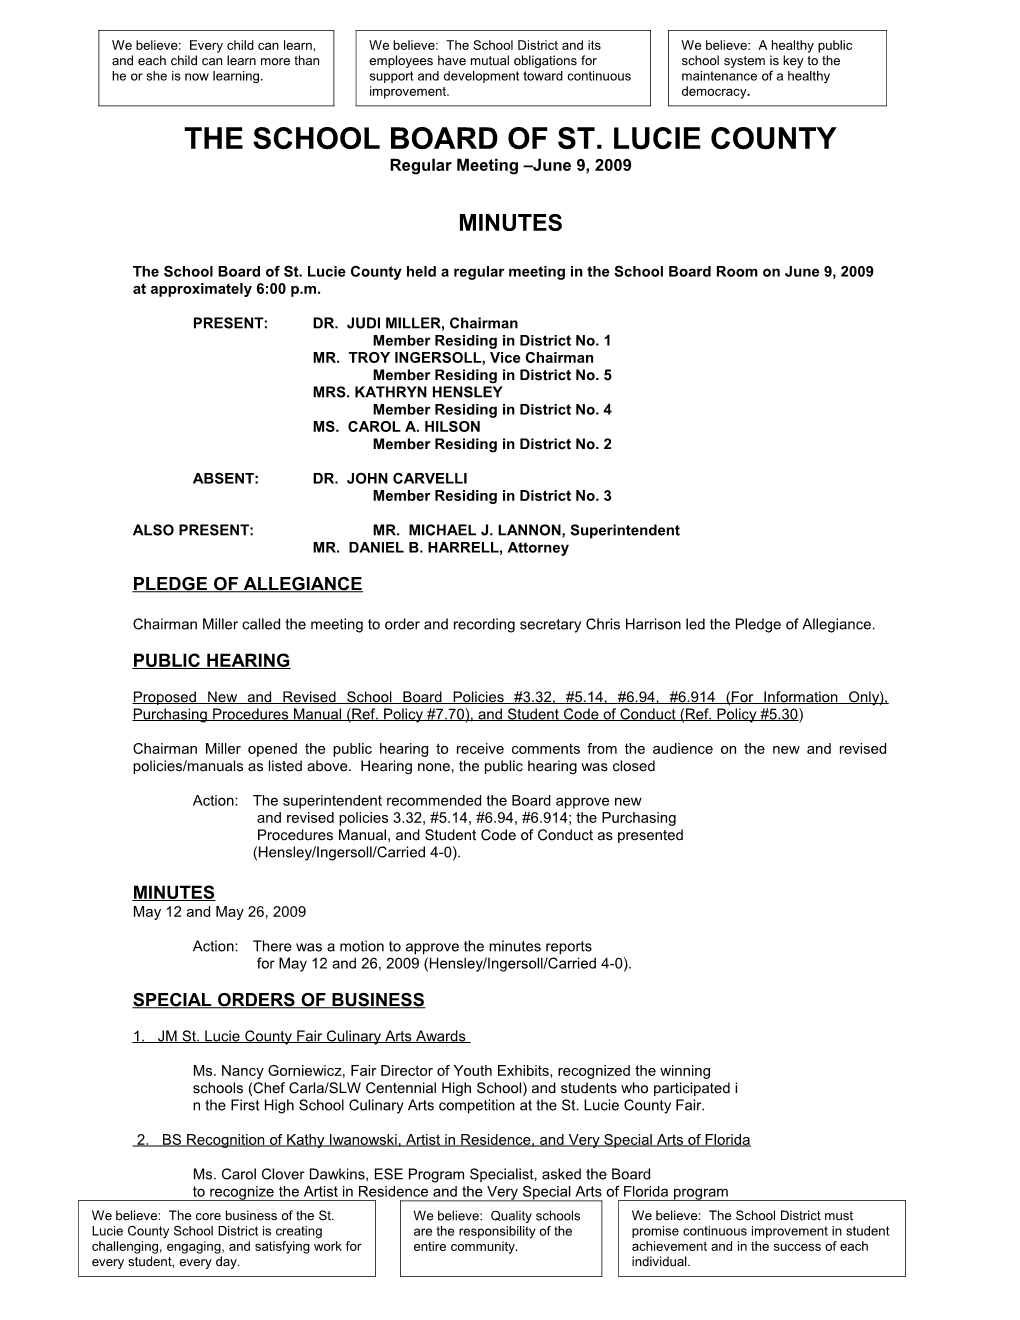 06-09-09 SLCSB Regular Meeting Minutes